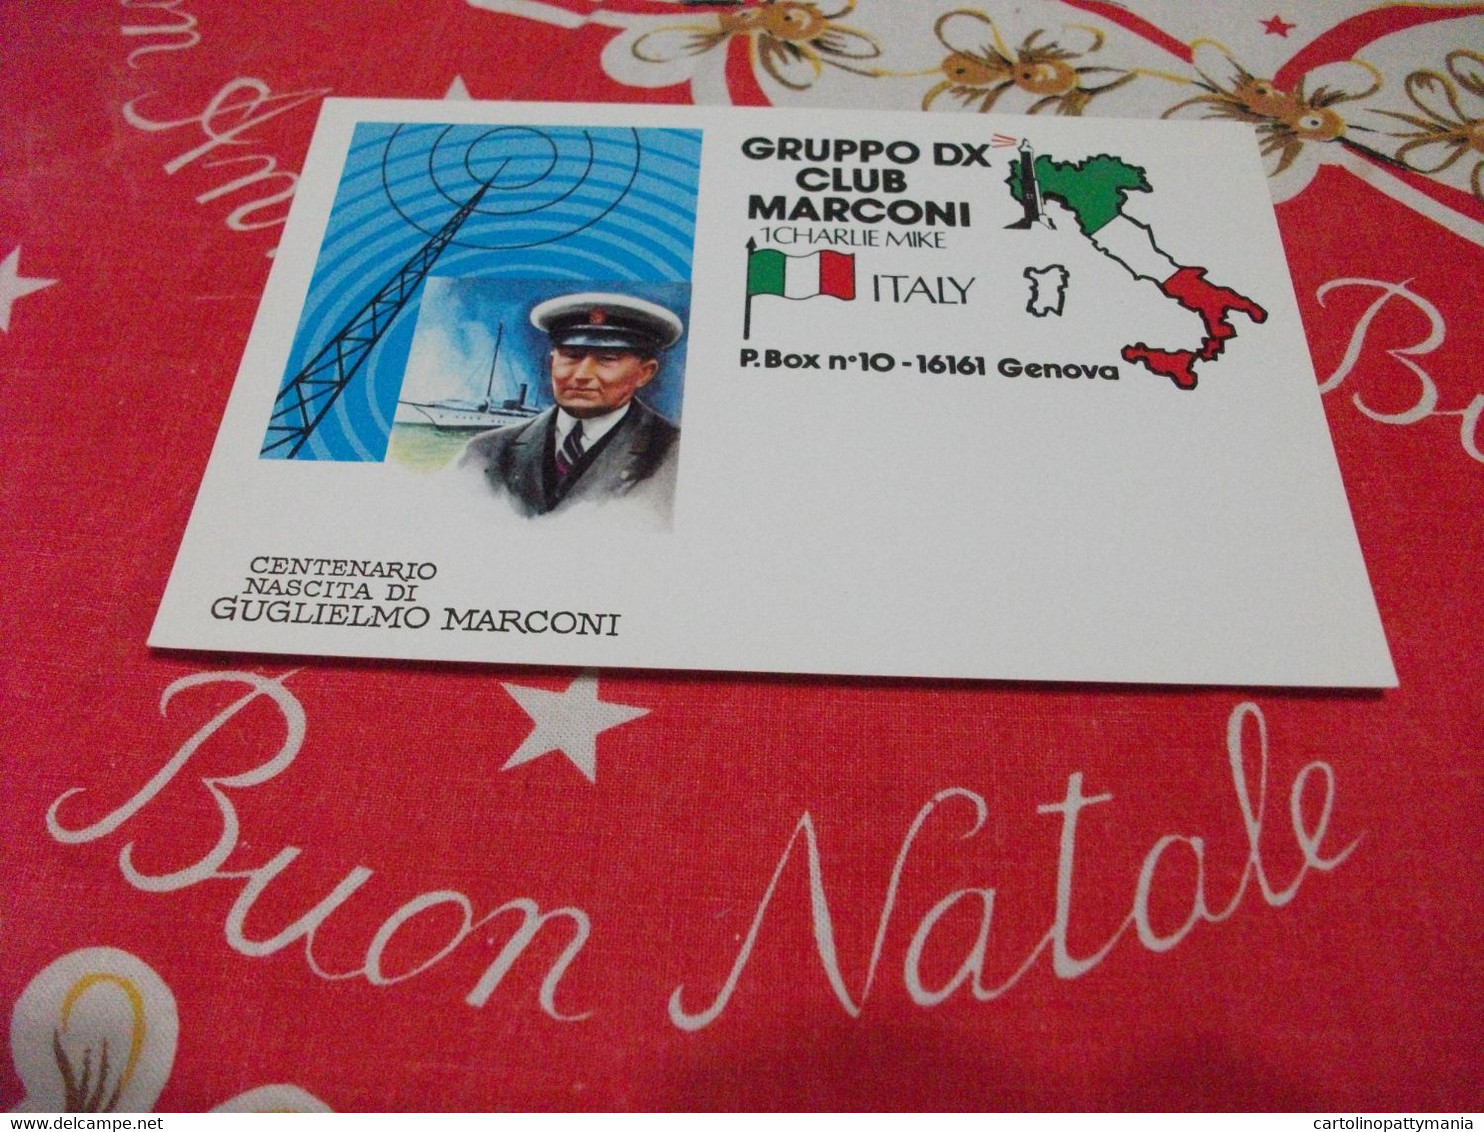 Centenario Nascita Di Guglielmo Marconi QLS GRUPPODX CLUB MARCONI NOBEL PER LA FISICA 1909 - Premio Nobel